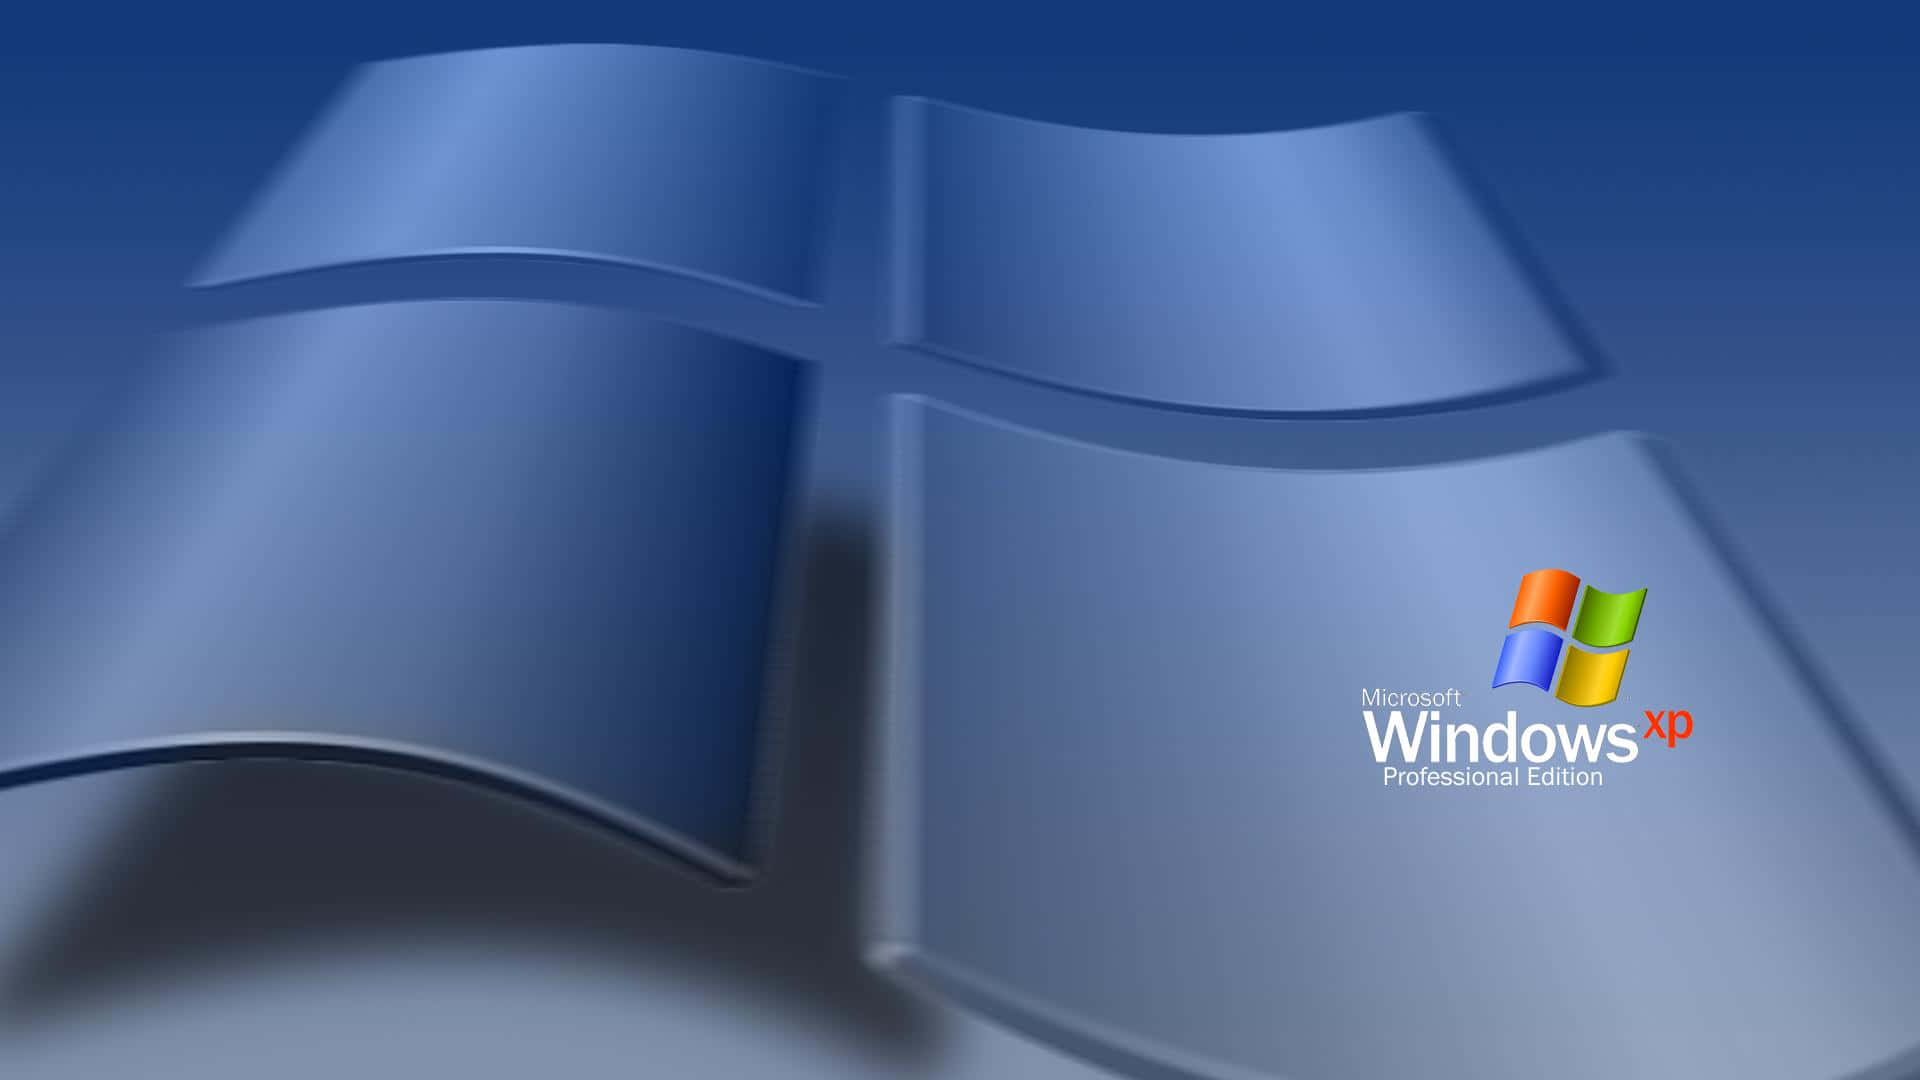 Enjoy the user-friendly elegance of Windows Xp